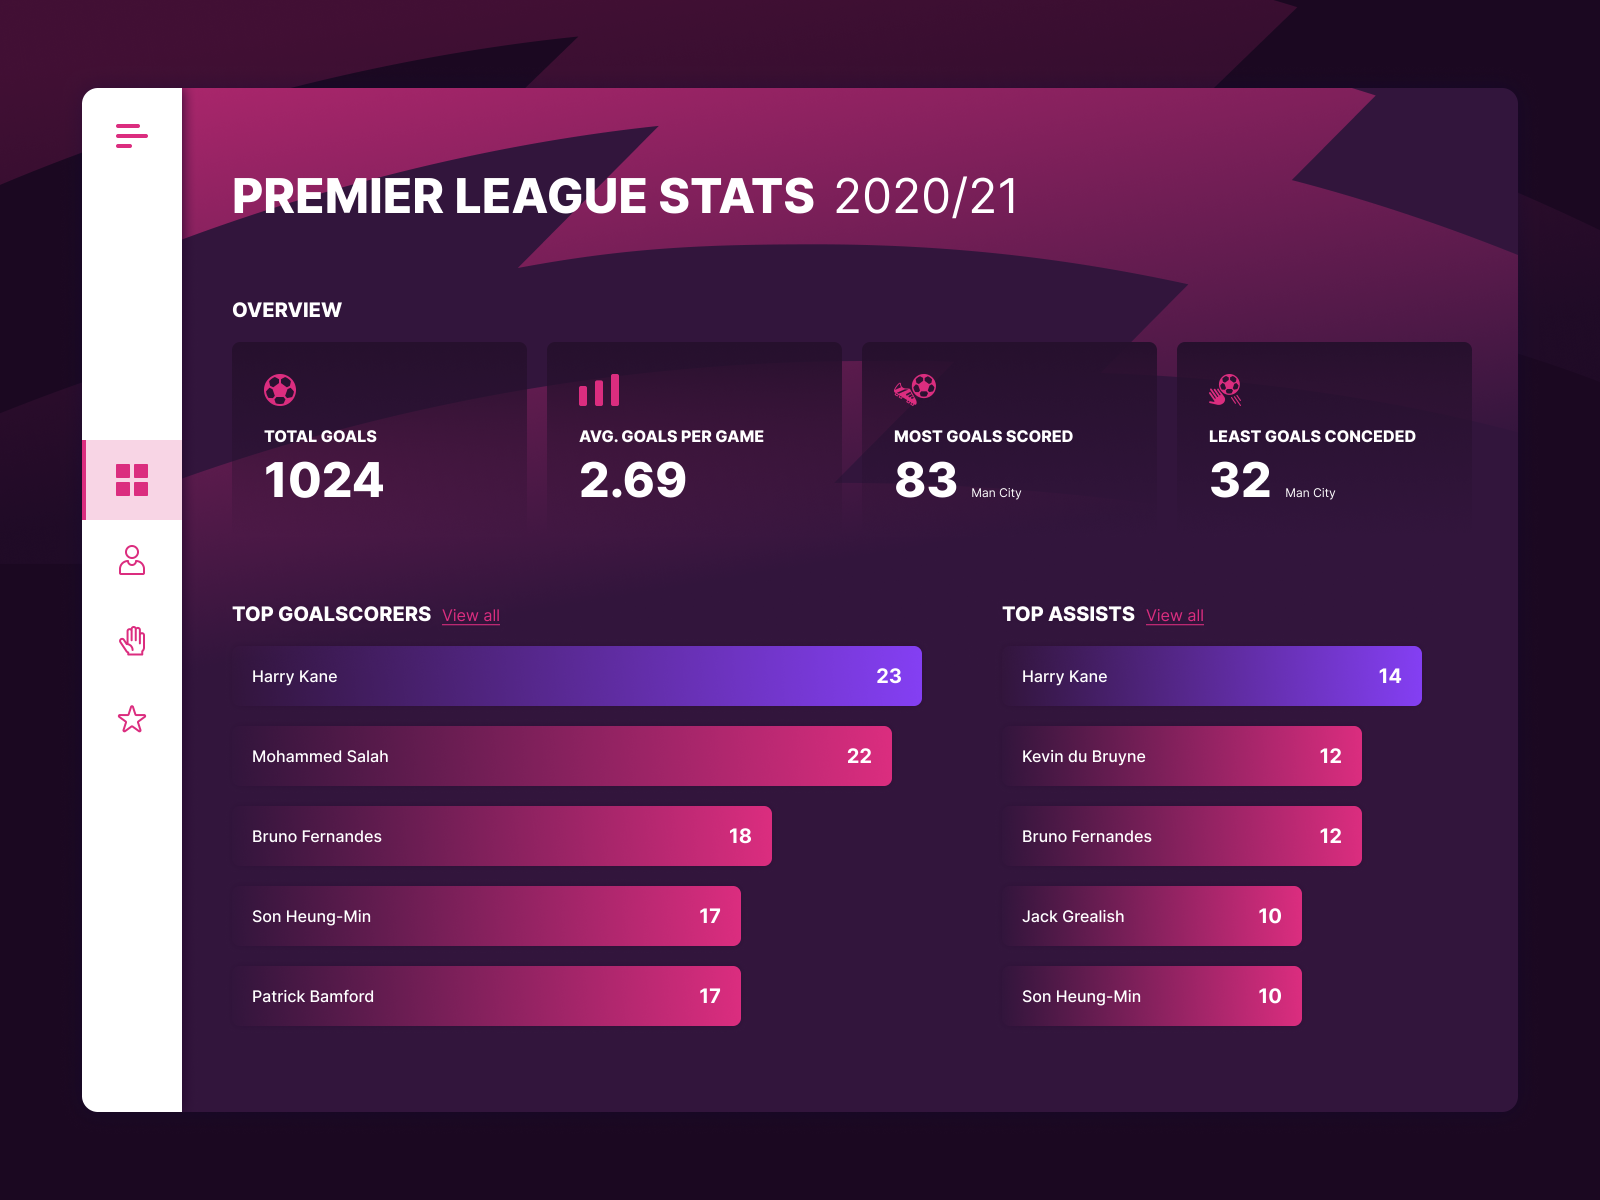 Dashboard - Soccer Stats by Luthpy Dwiyana on Dribbble